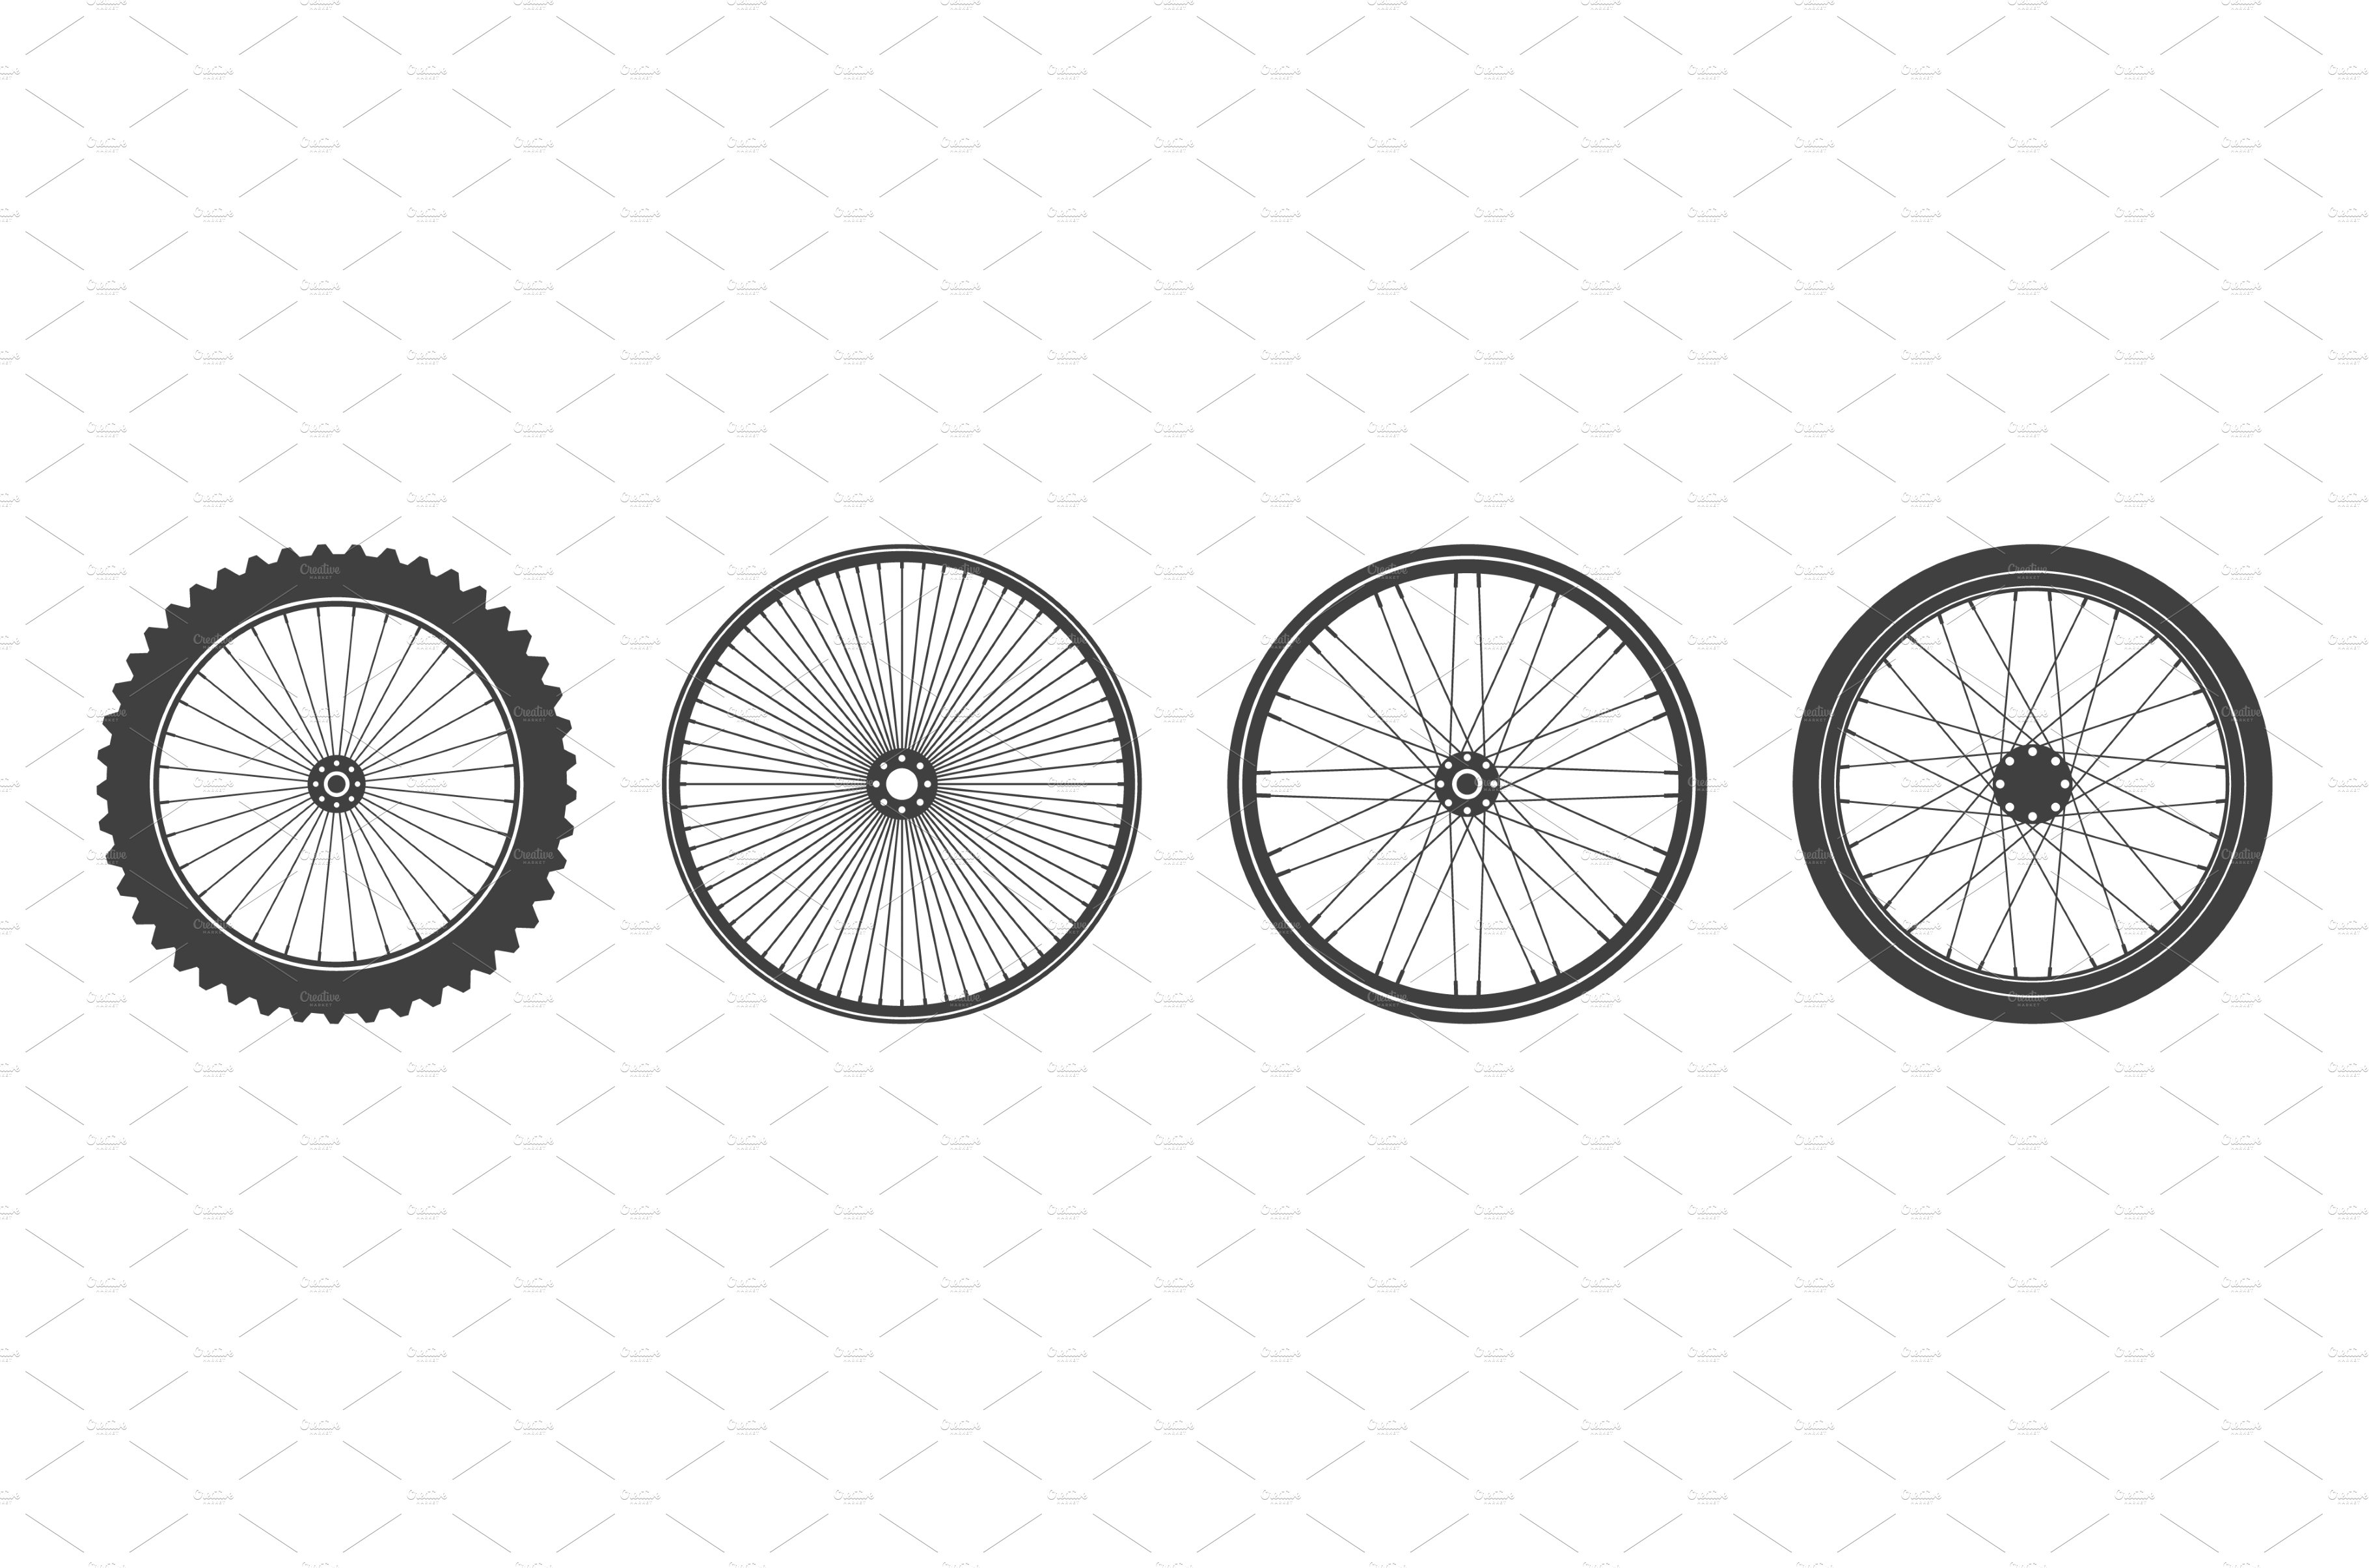 Black bicycle wheel symbols cover image.